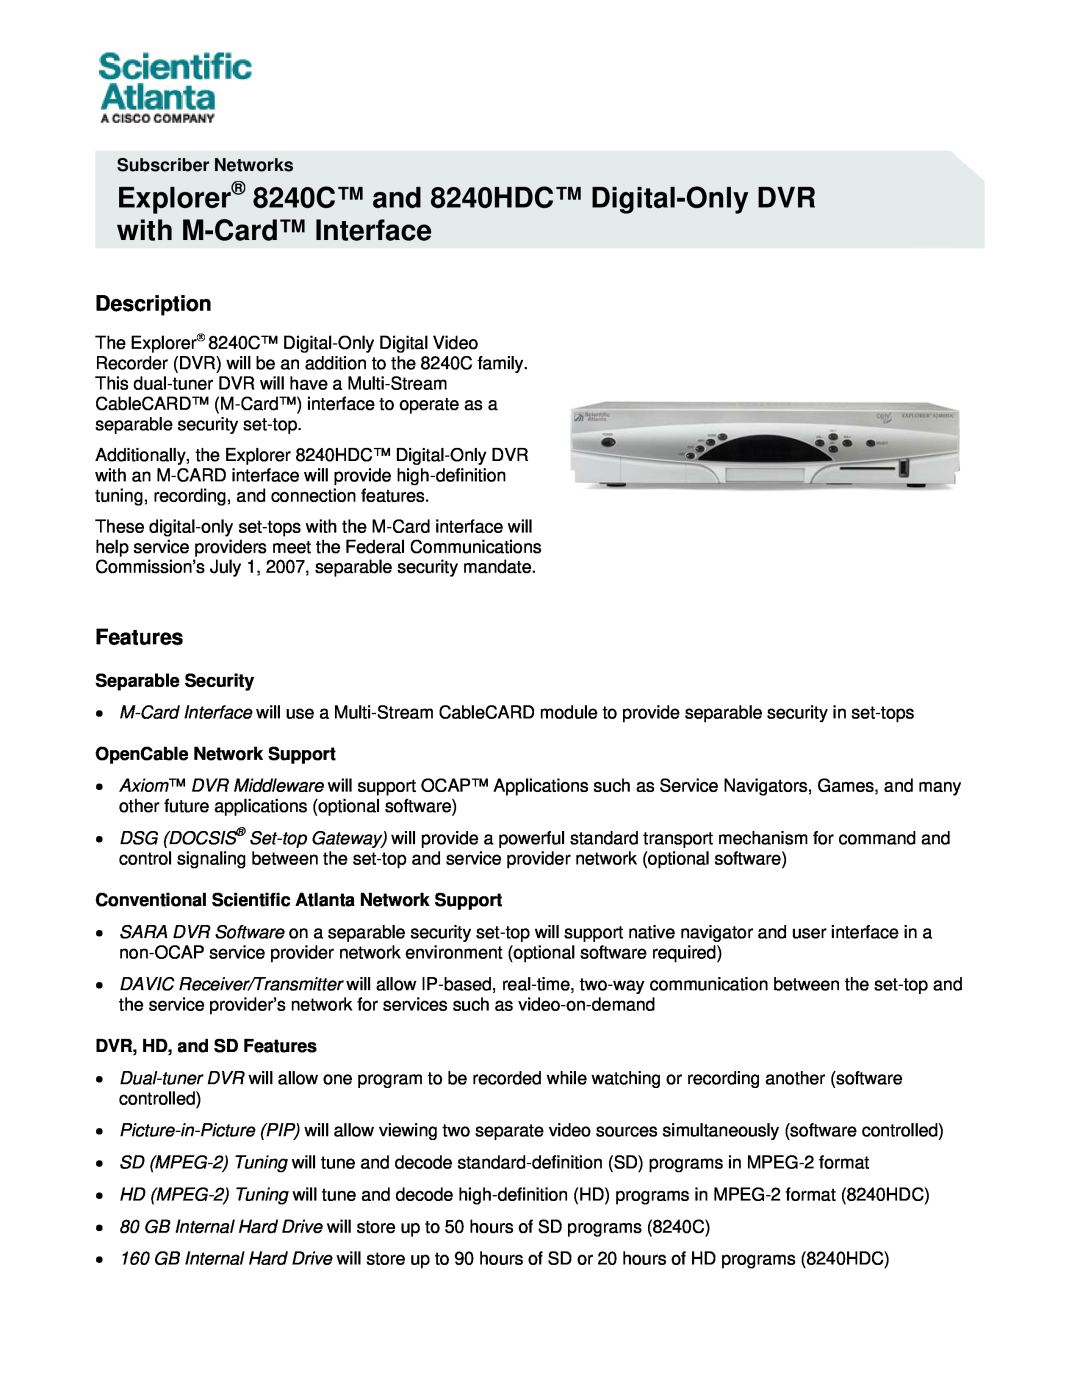 Scientific Atlanta manual Description, Features, Explorer 8240C and 8240HDC Digital-Only DVR with M-Card Interface 